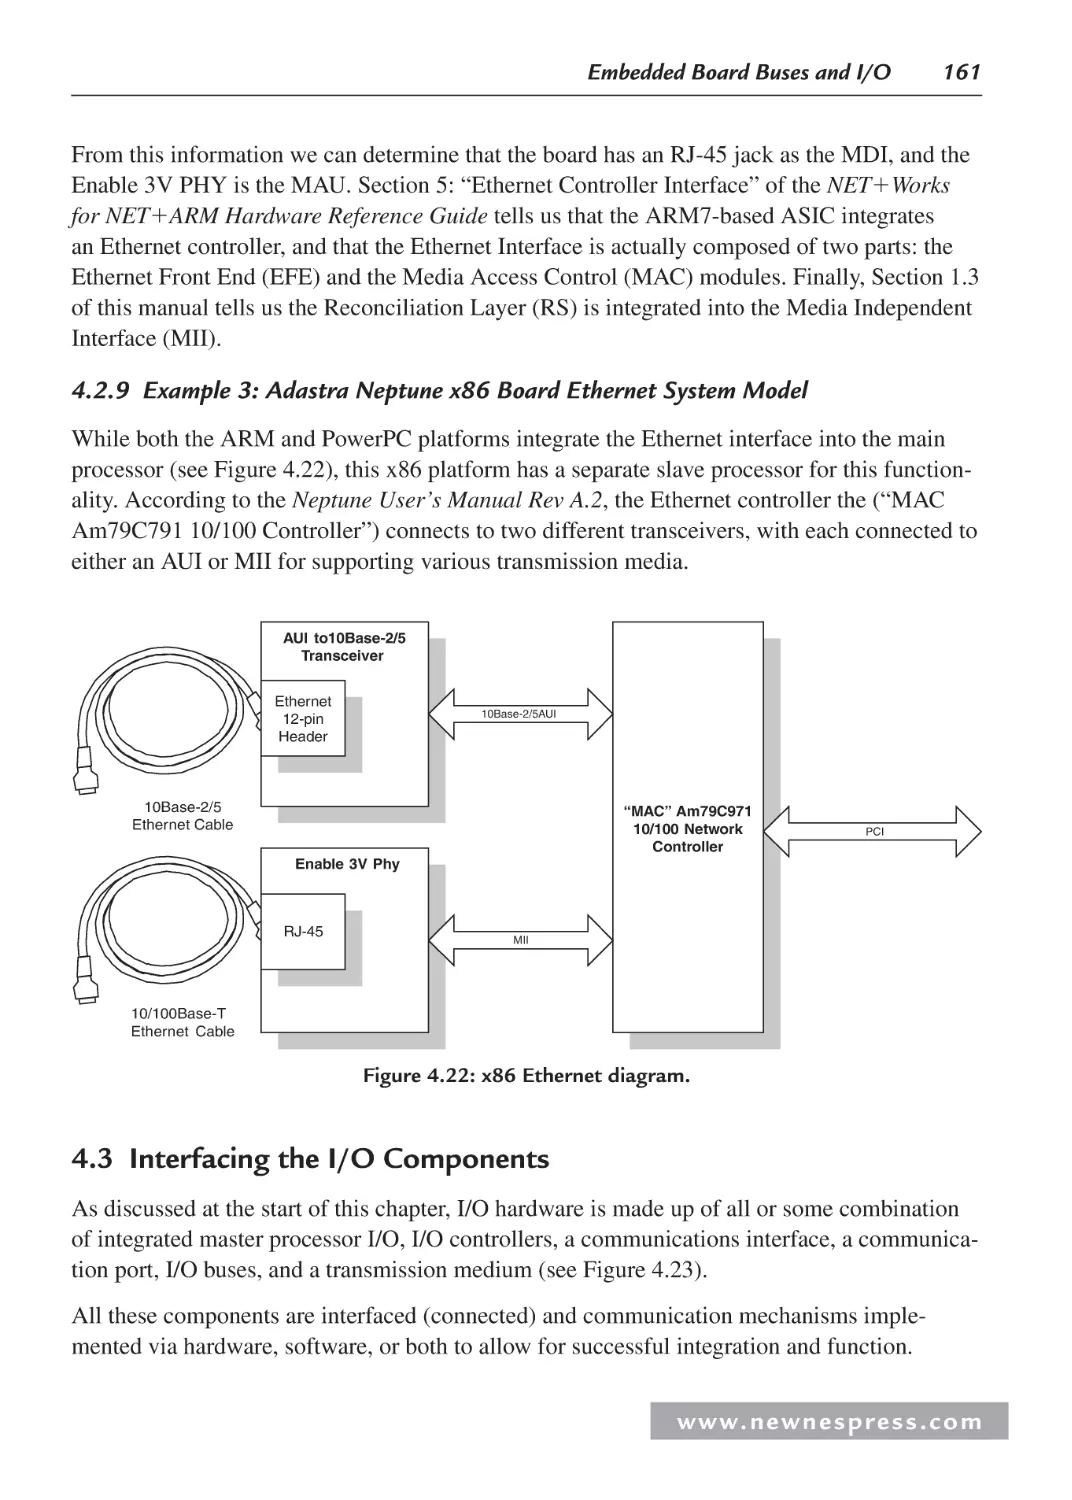 4.3 Interfacing the I/O Components